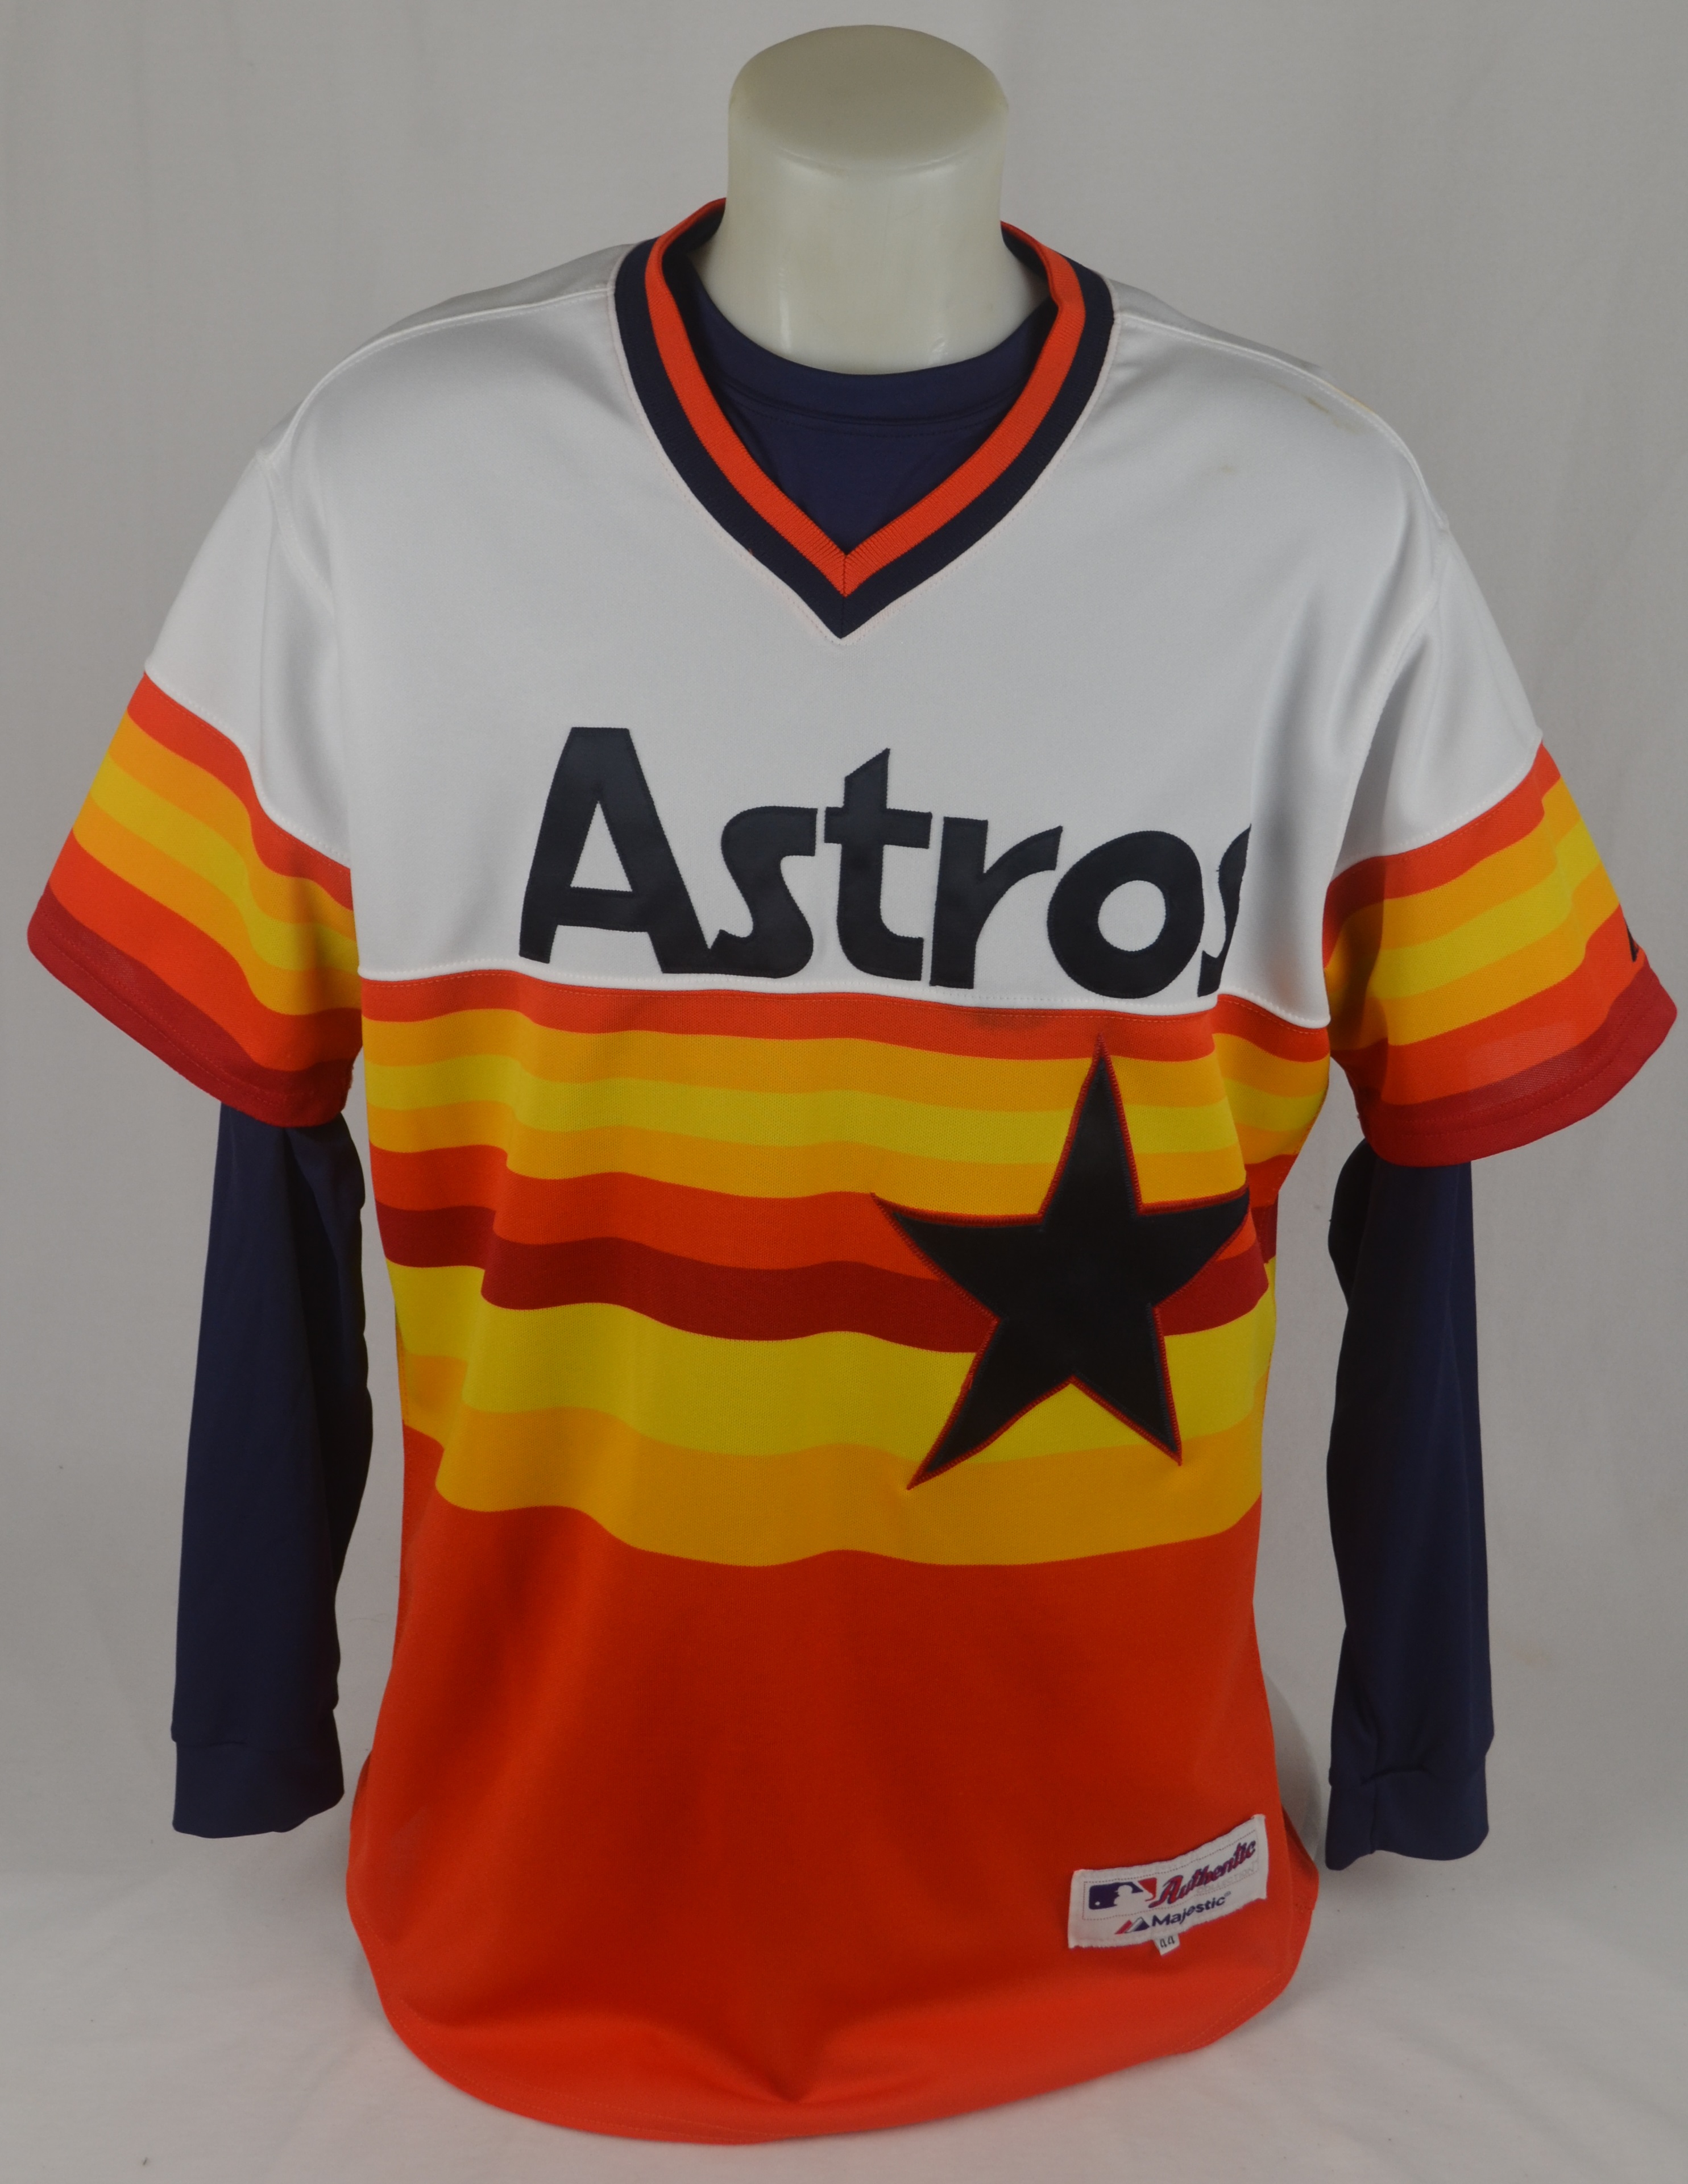 Houston Astros - Authenticated game-used #postseason jerseys